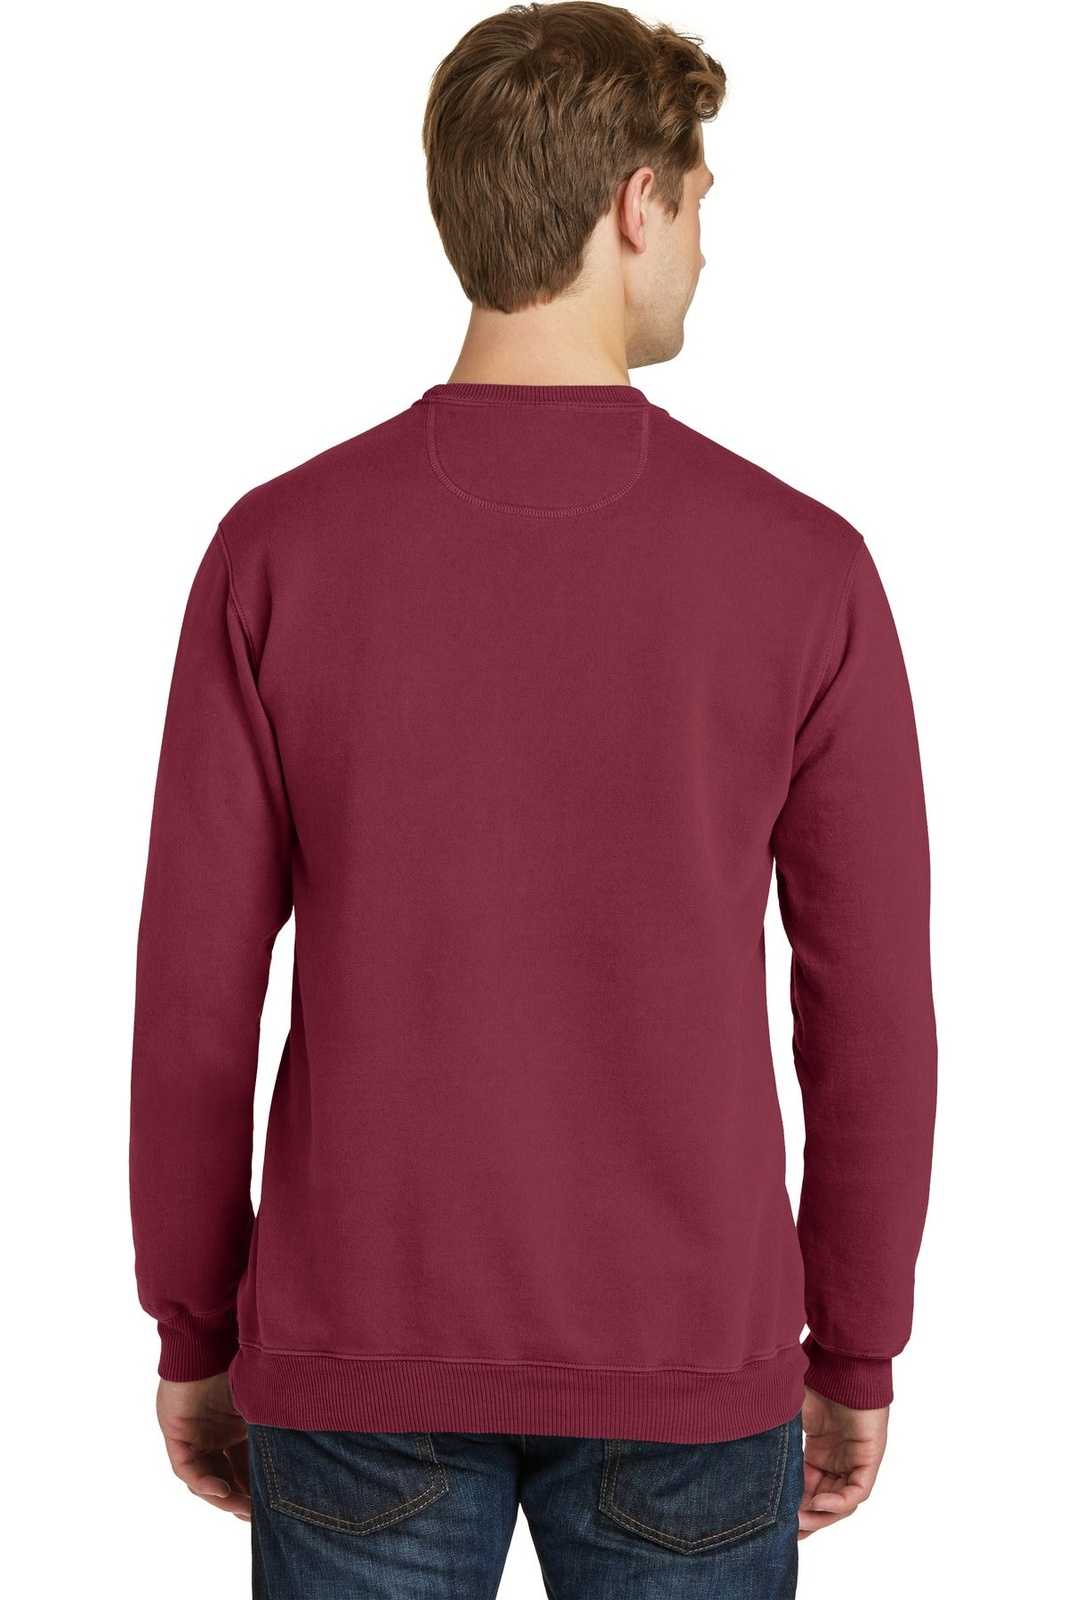 Port & Company PC098 Beach Wash Garment-Dyed Sweatshirt - Merlot - HIT a Double - 1